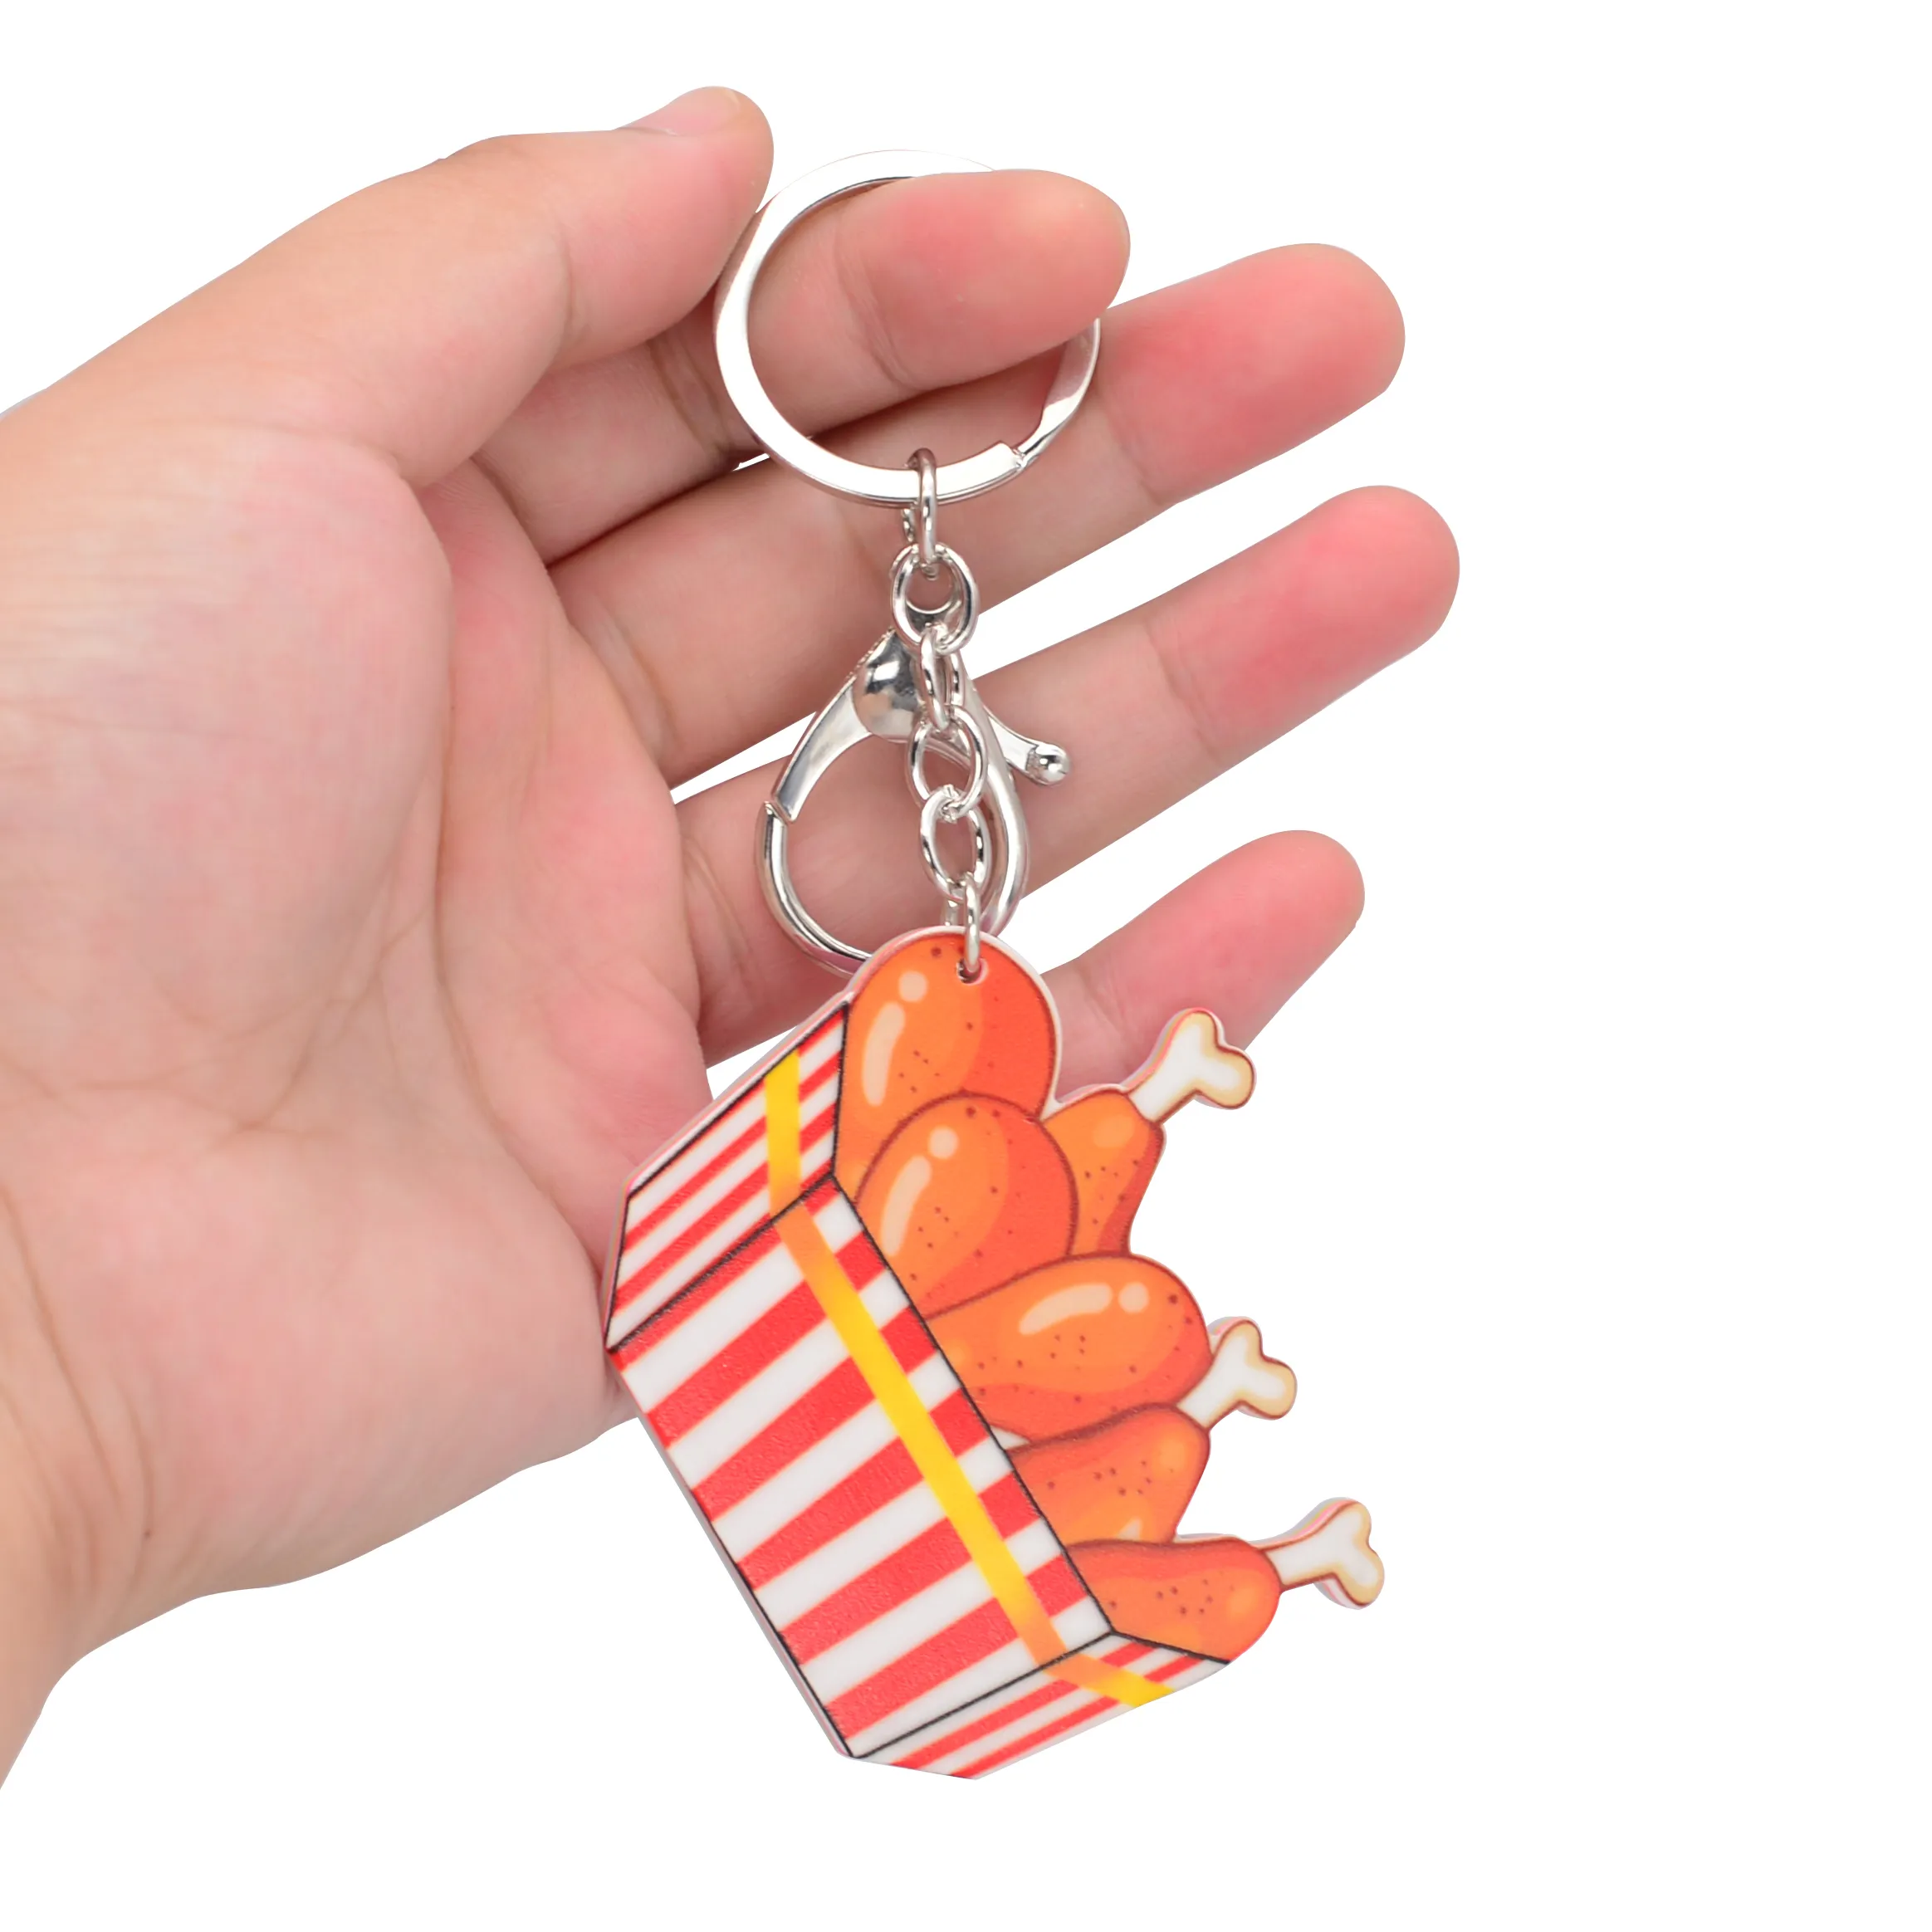 Cute Cartoon Acrylic Keychains Creative Food Drumsticks Key Chain Jewelry For Women Kids Girls Gift Car Accessory